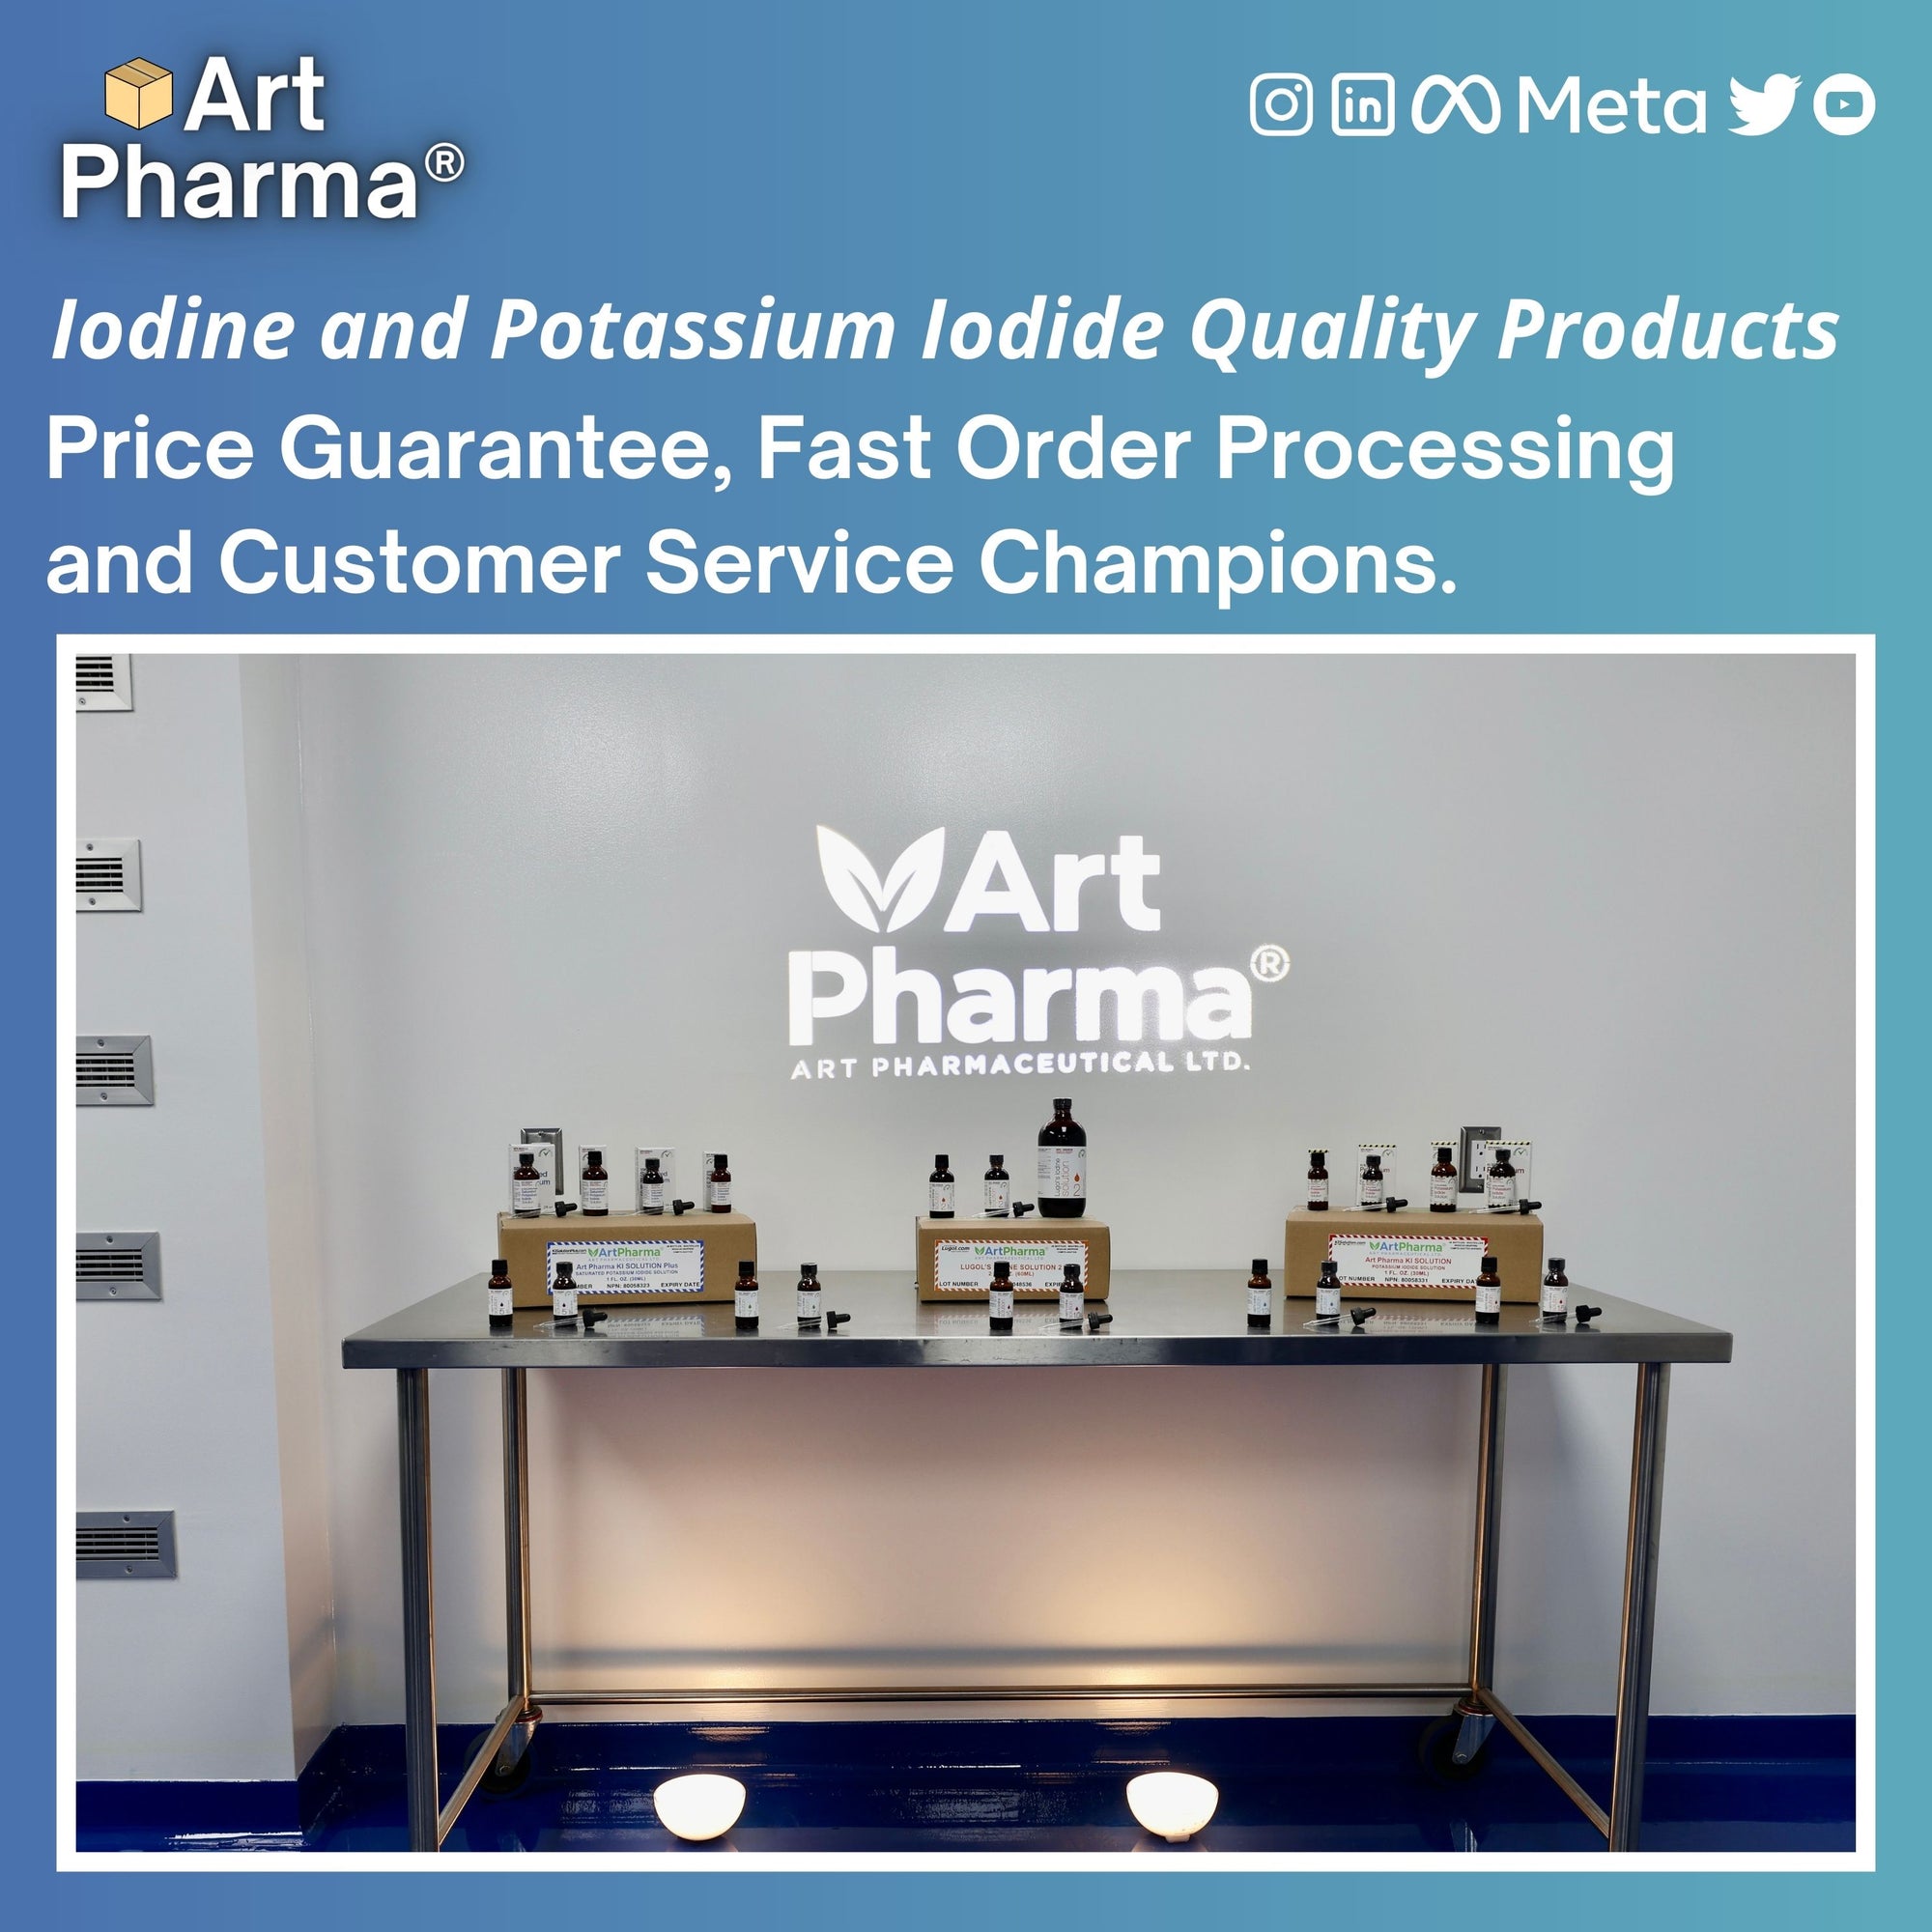 Art Pharma® Quality Iodine and Potassium Iodide Products